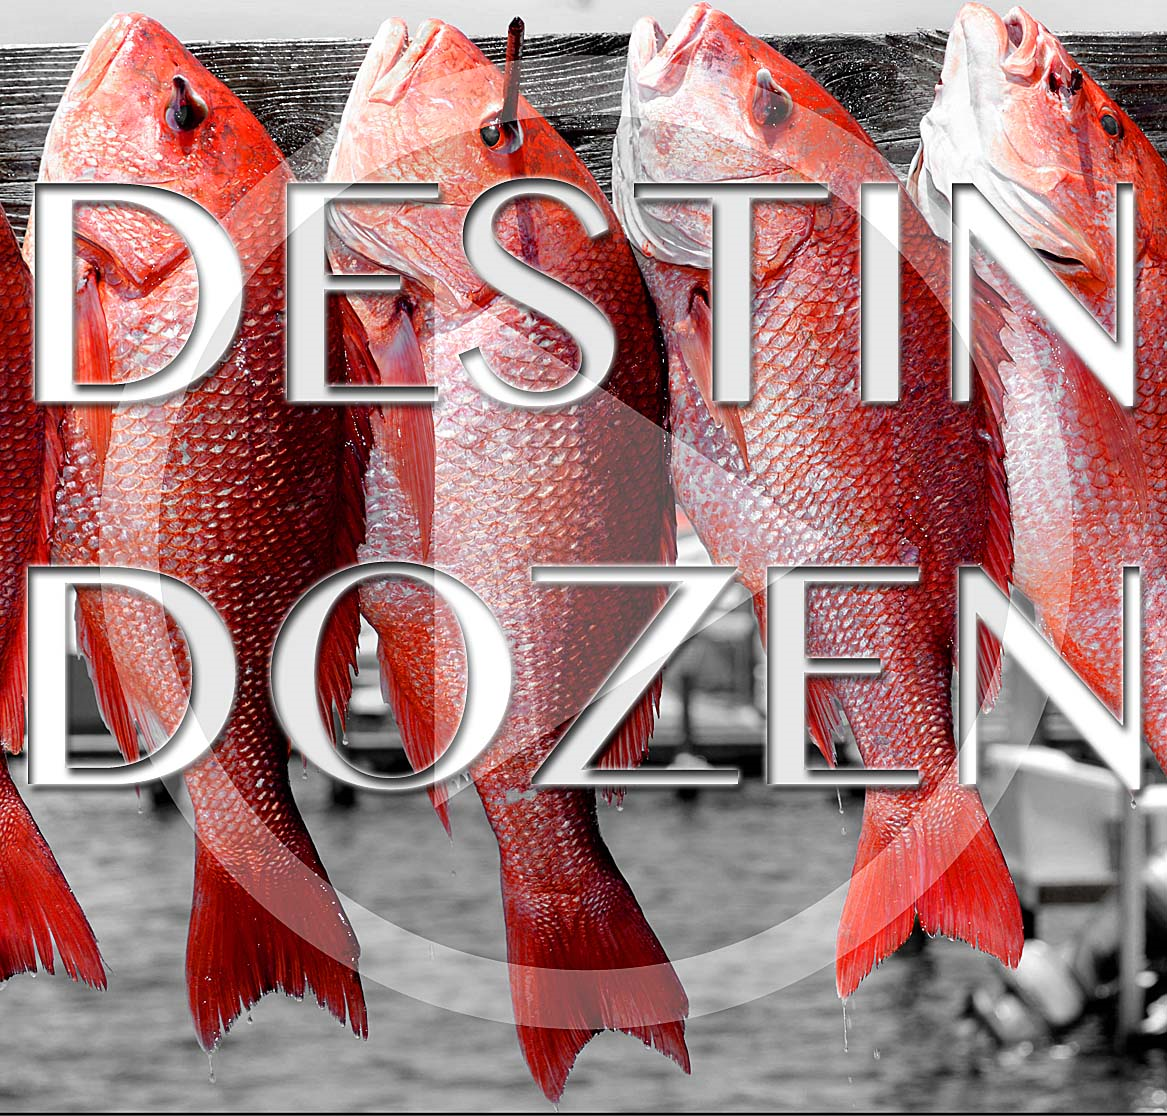 Destin Dozen Episode 8: Christmas parades, events and happenings in Destin